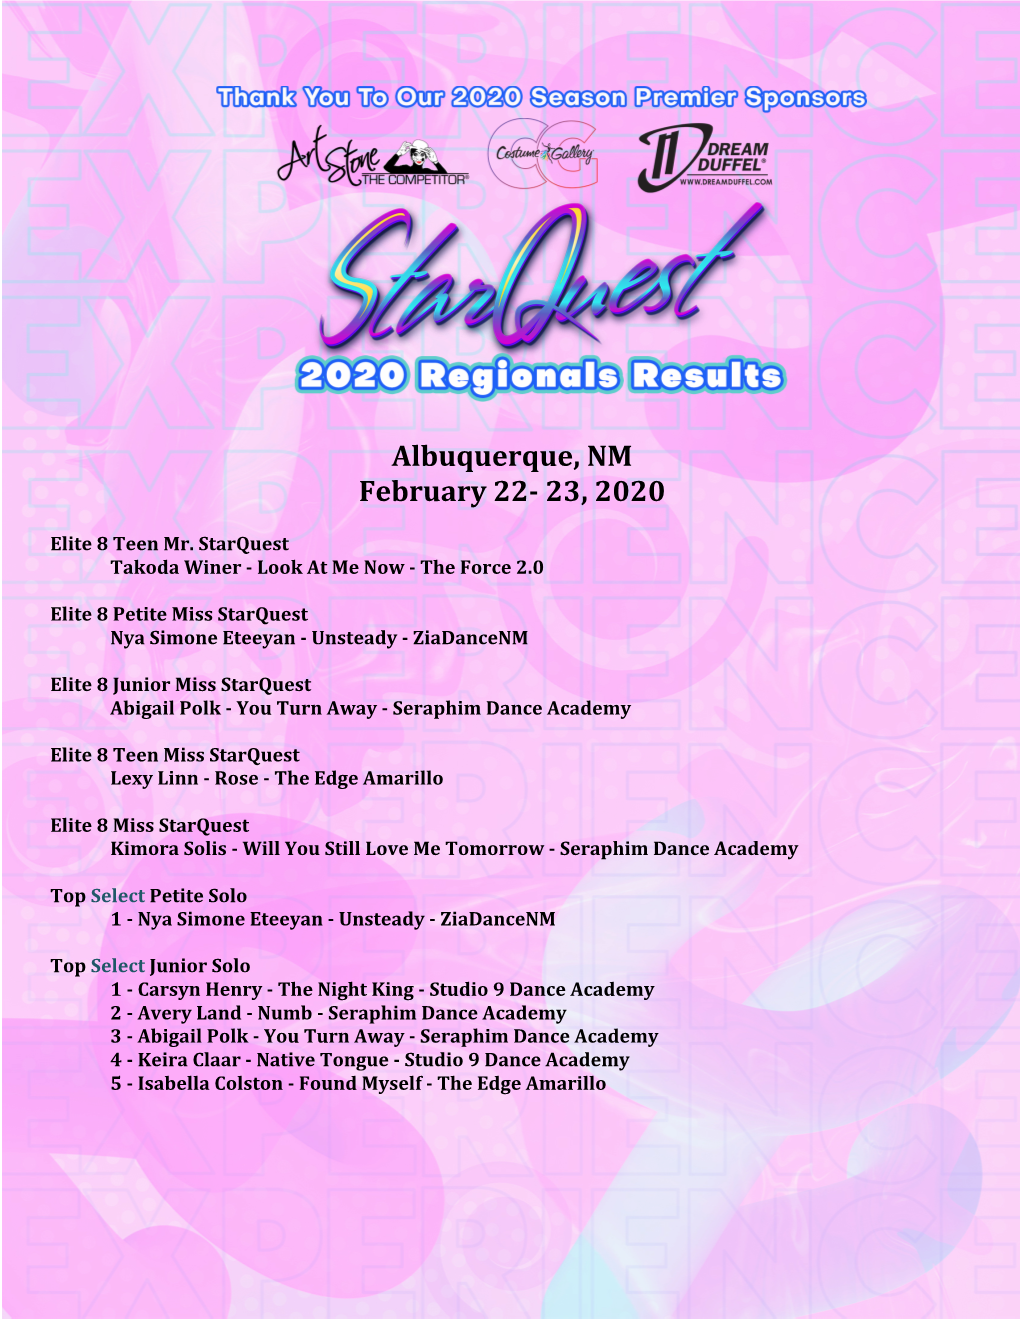 Albuquerque, NM February 22- 23, 2020